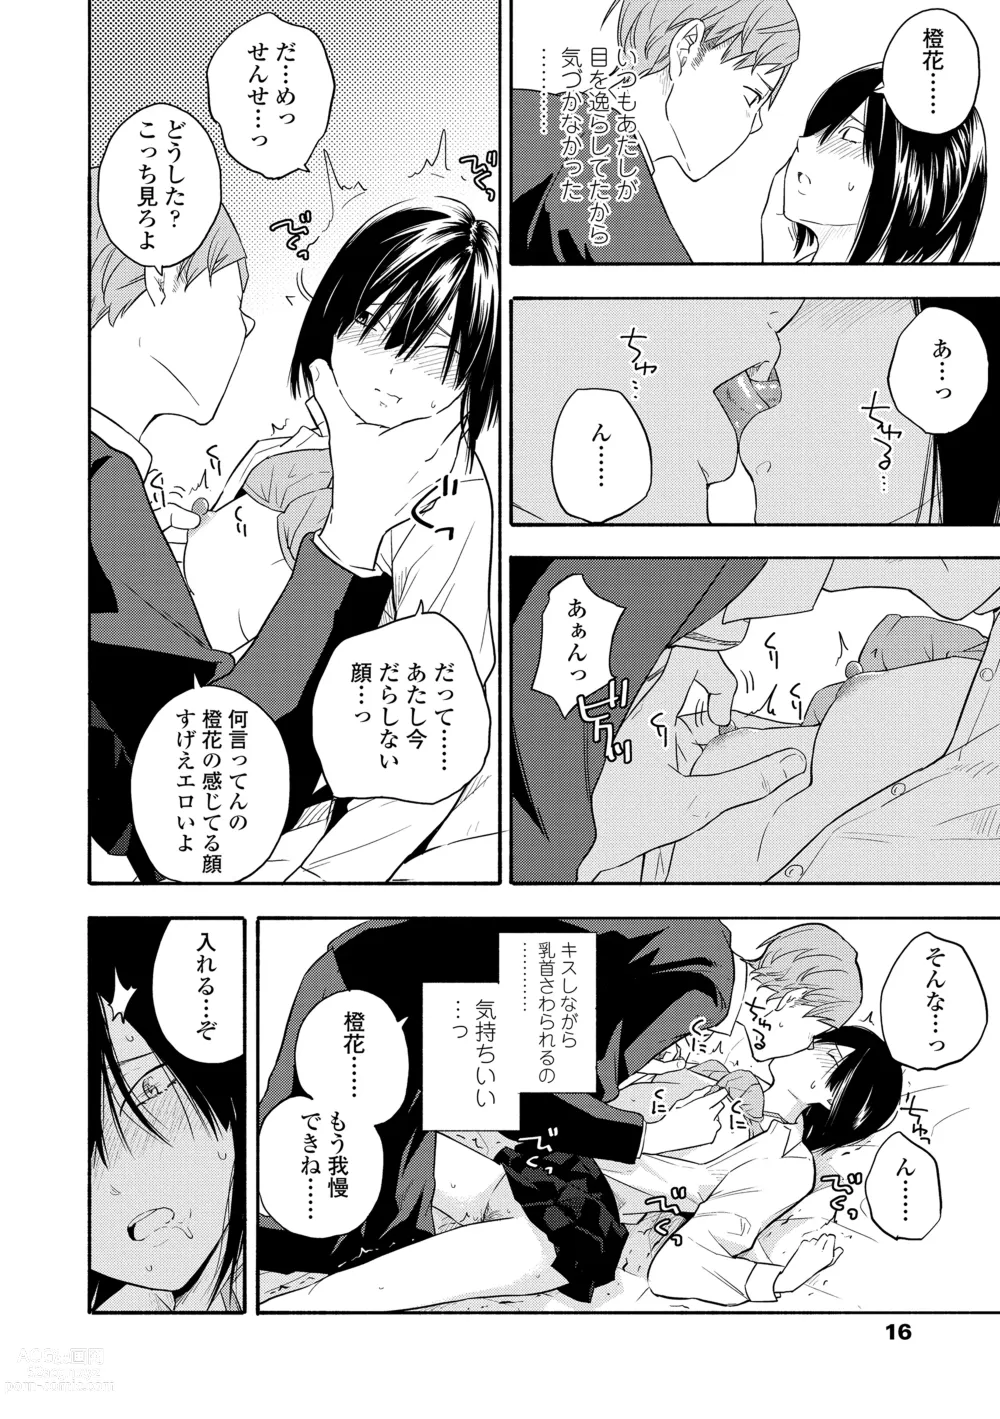 Page 18 of manga Shishunki no Eros - puberty eros + DLsite Kounyu Tokuten